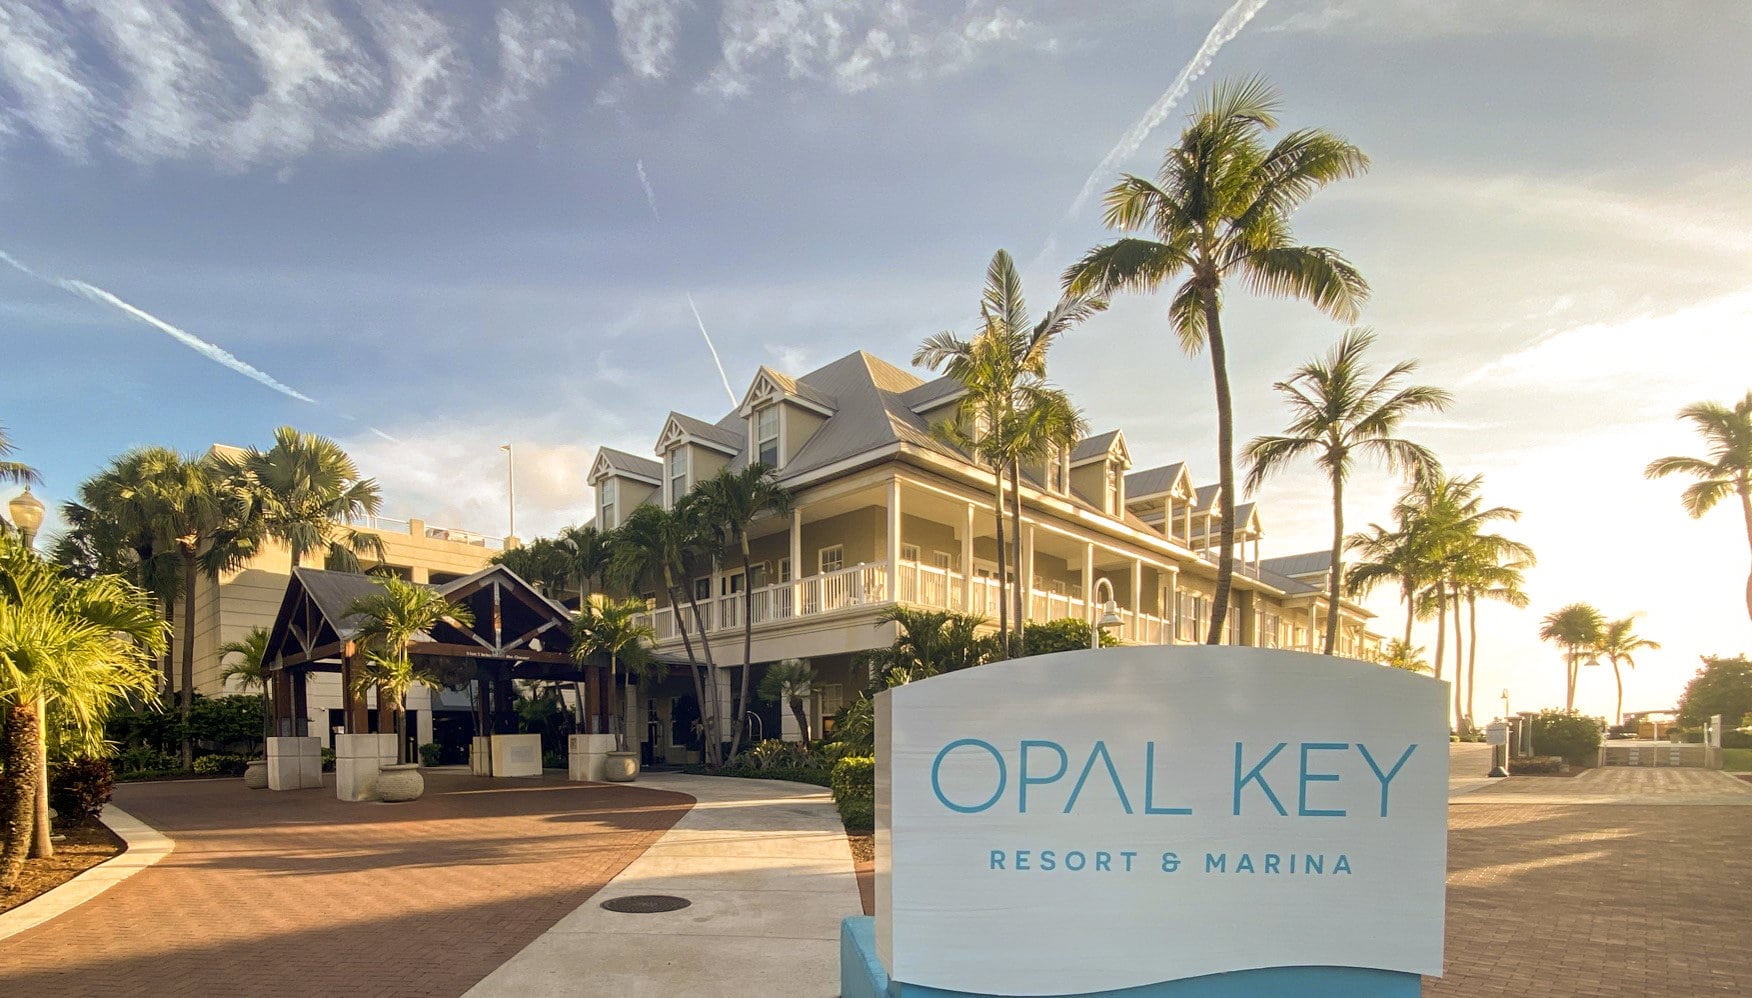 Opal Key Resort Key West Florida